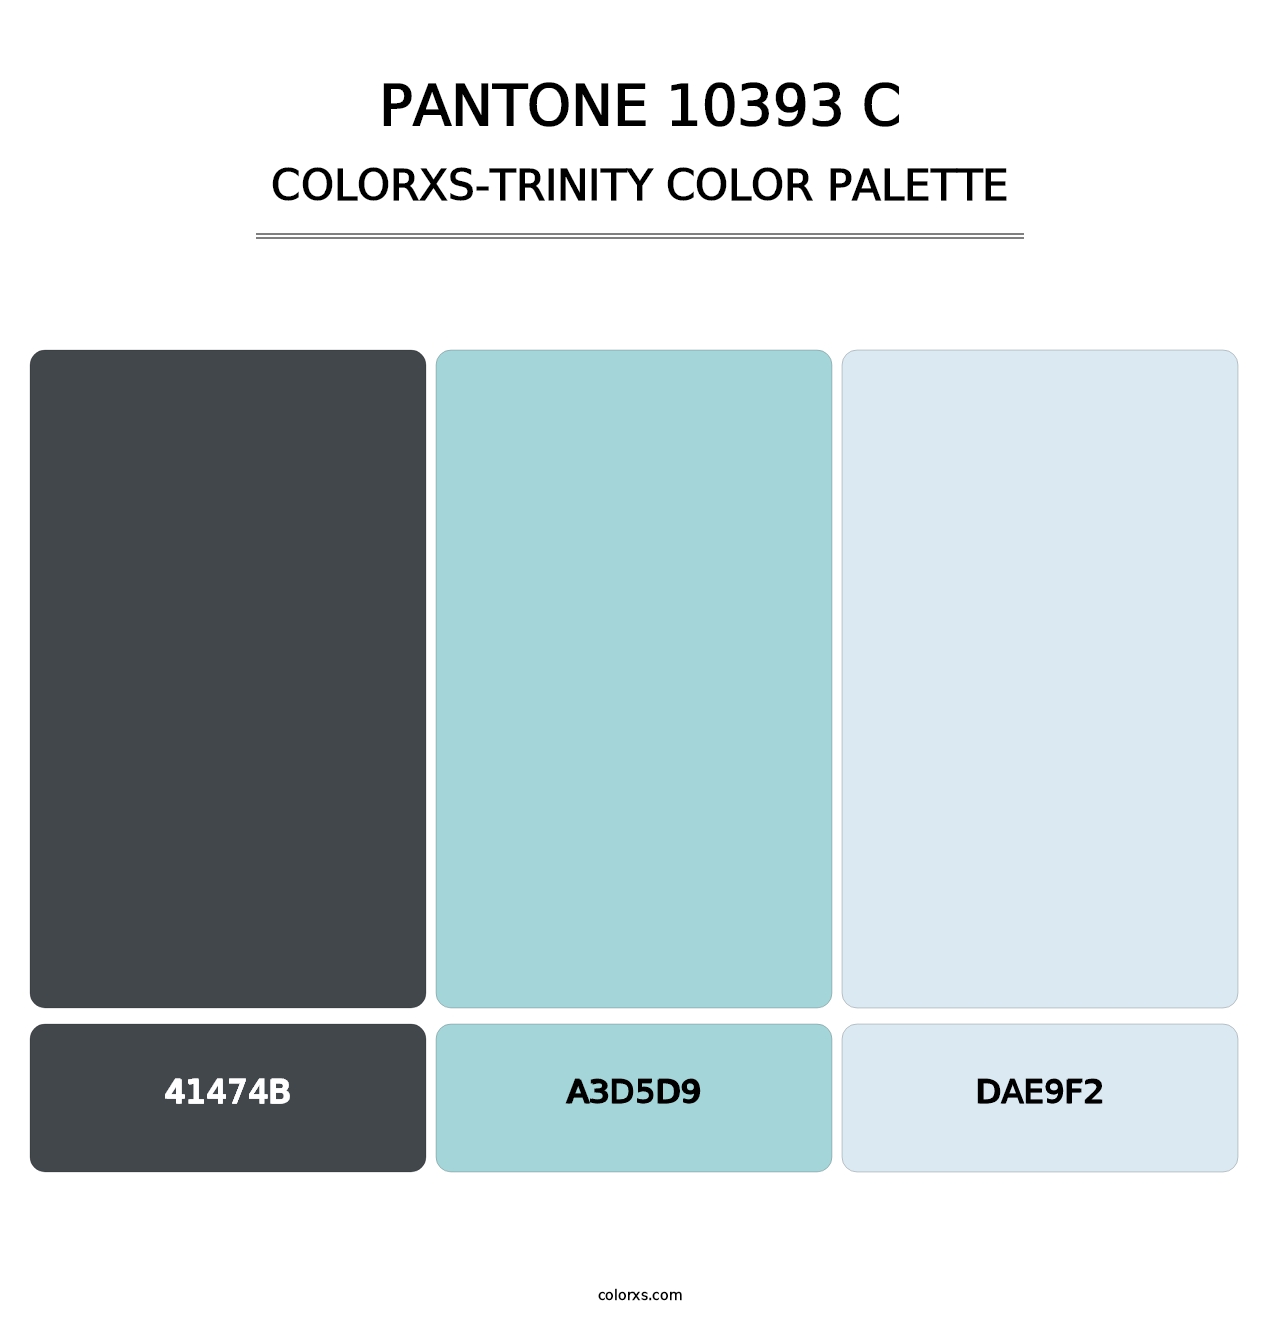 PANTONE 10393 C - Colorxs Trinity Palette